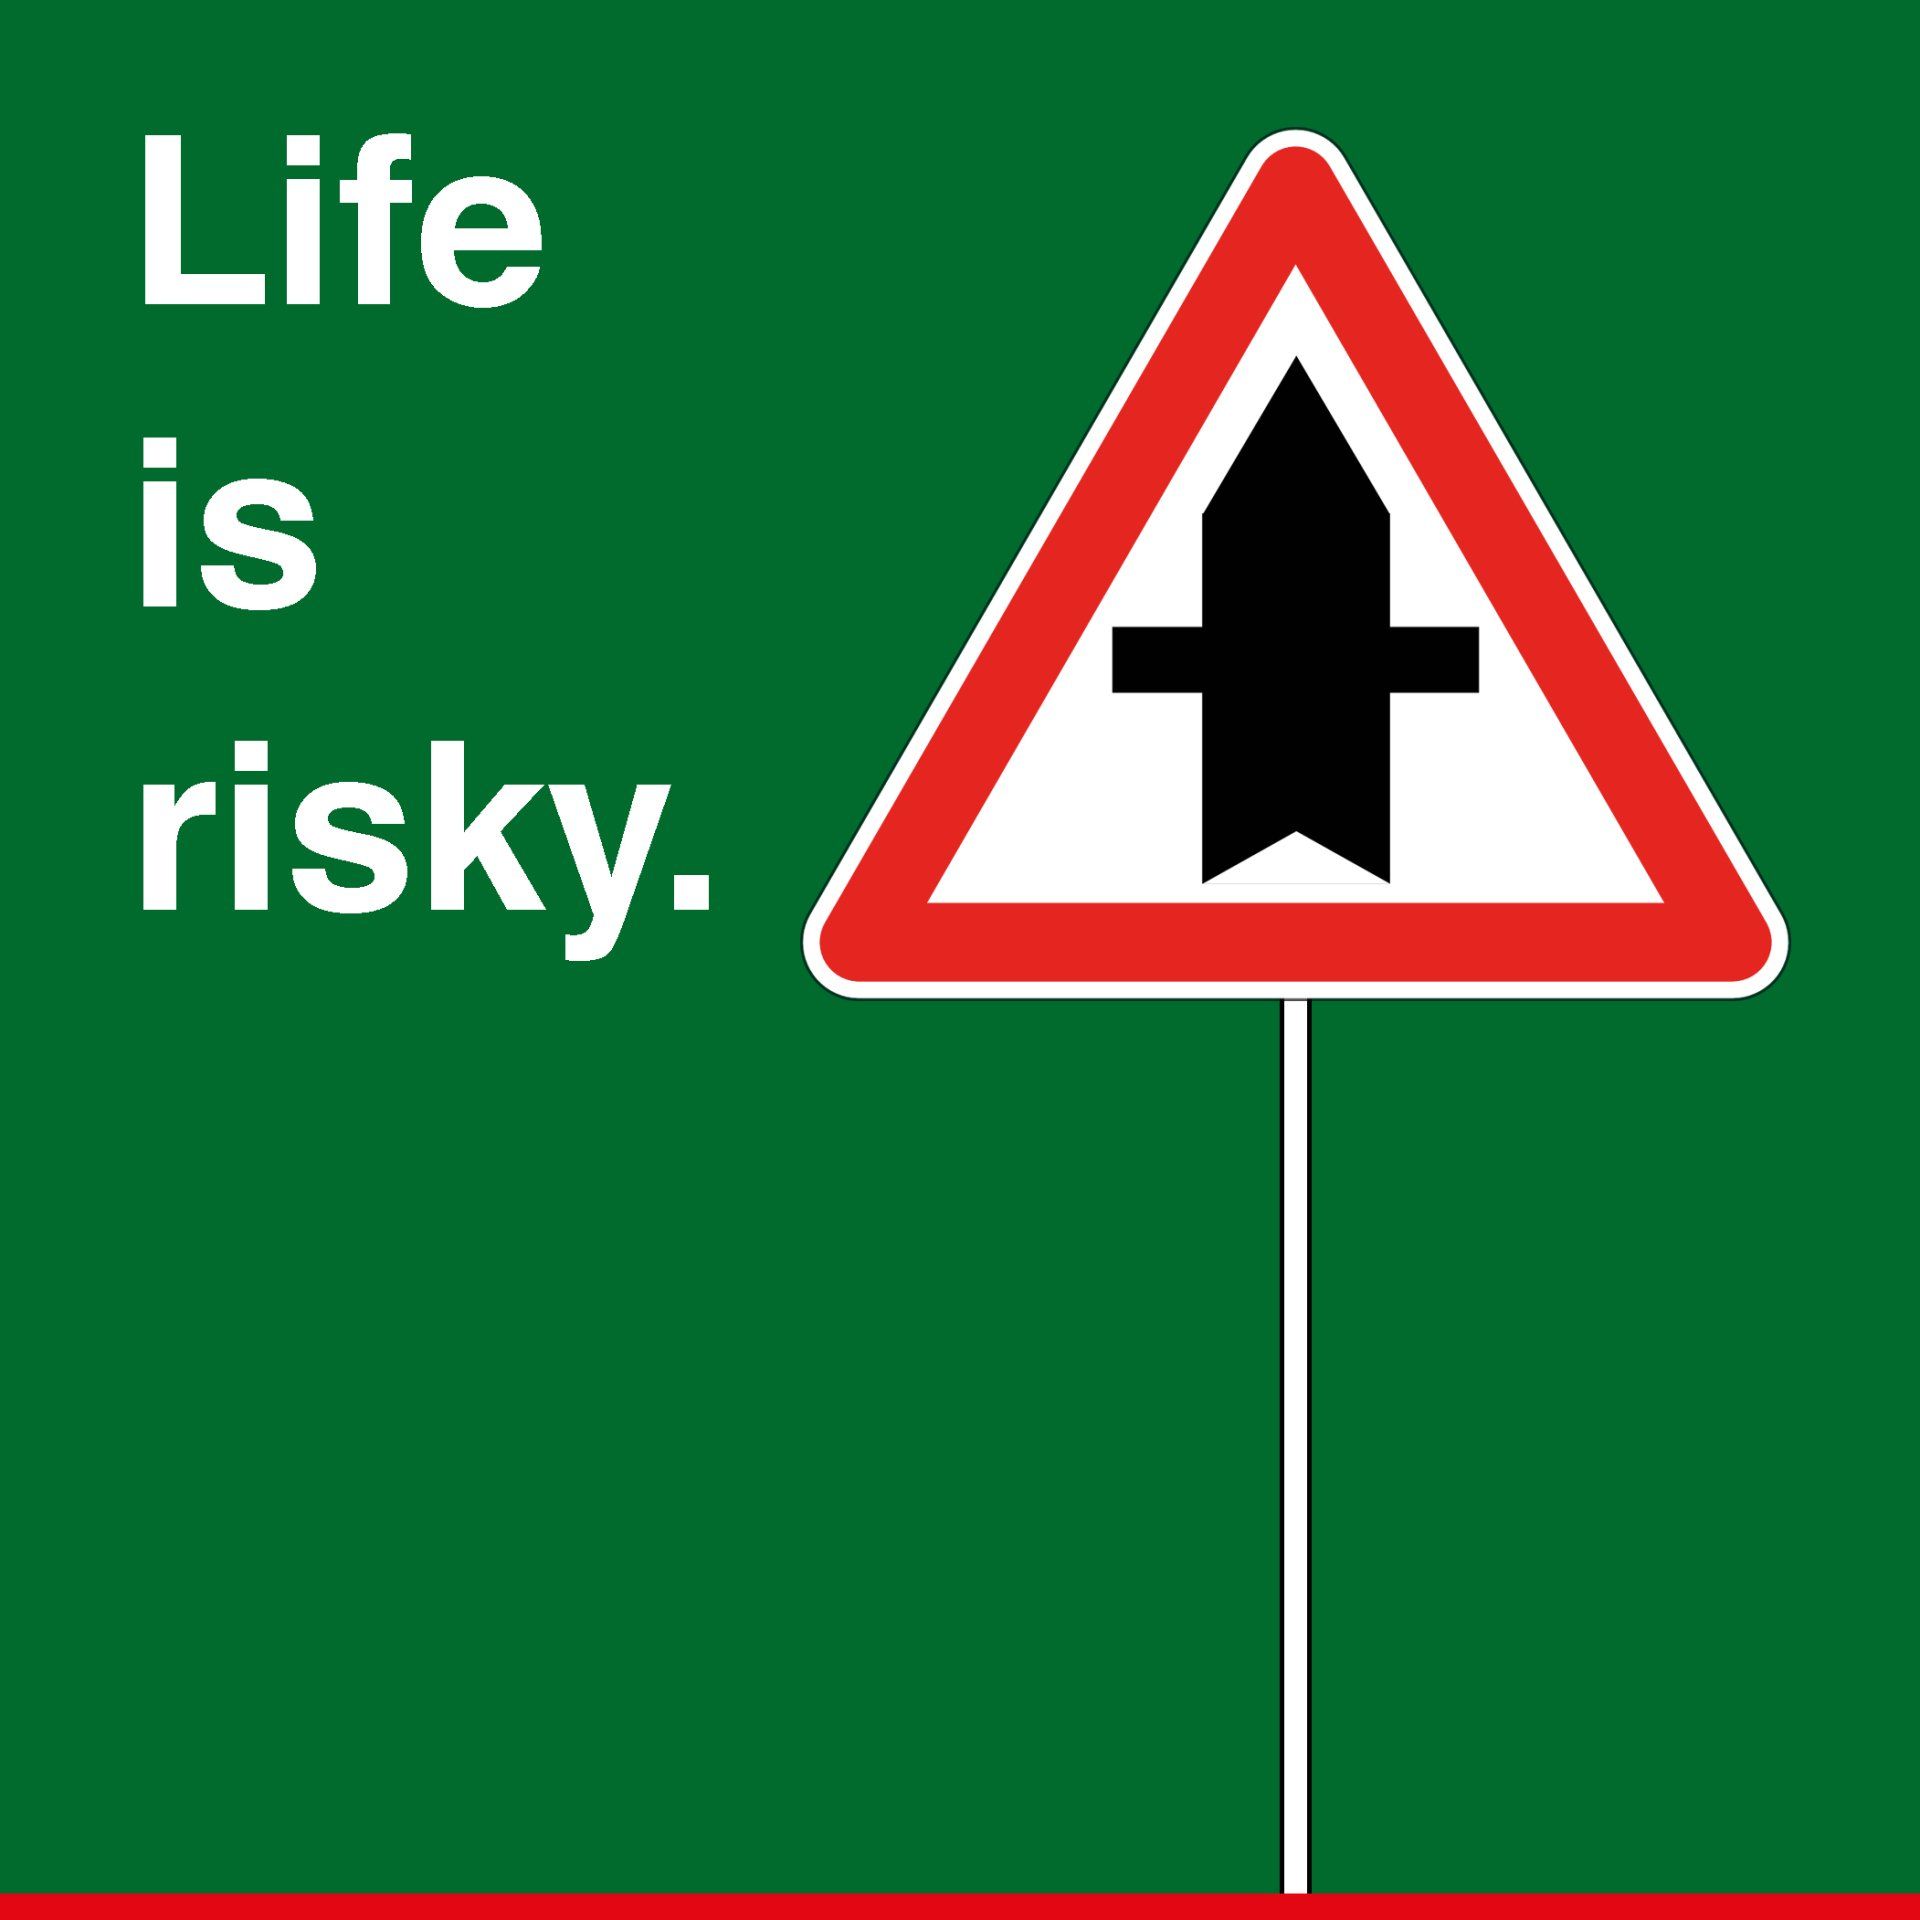 2-serve HDI Osnabrück: Life is risky.